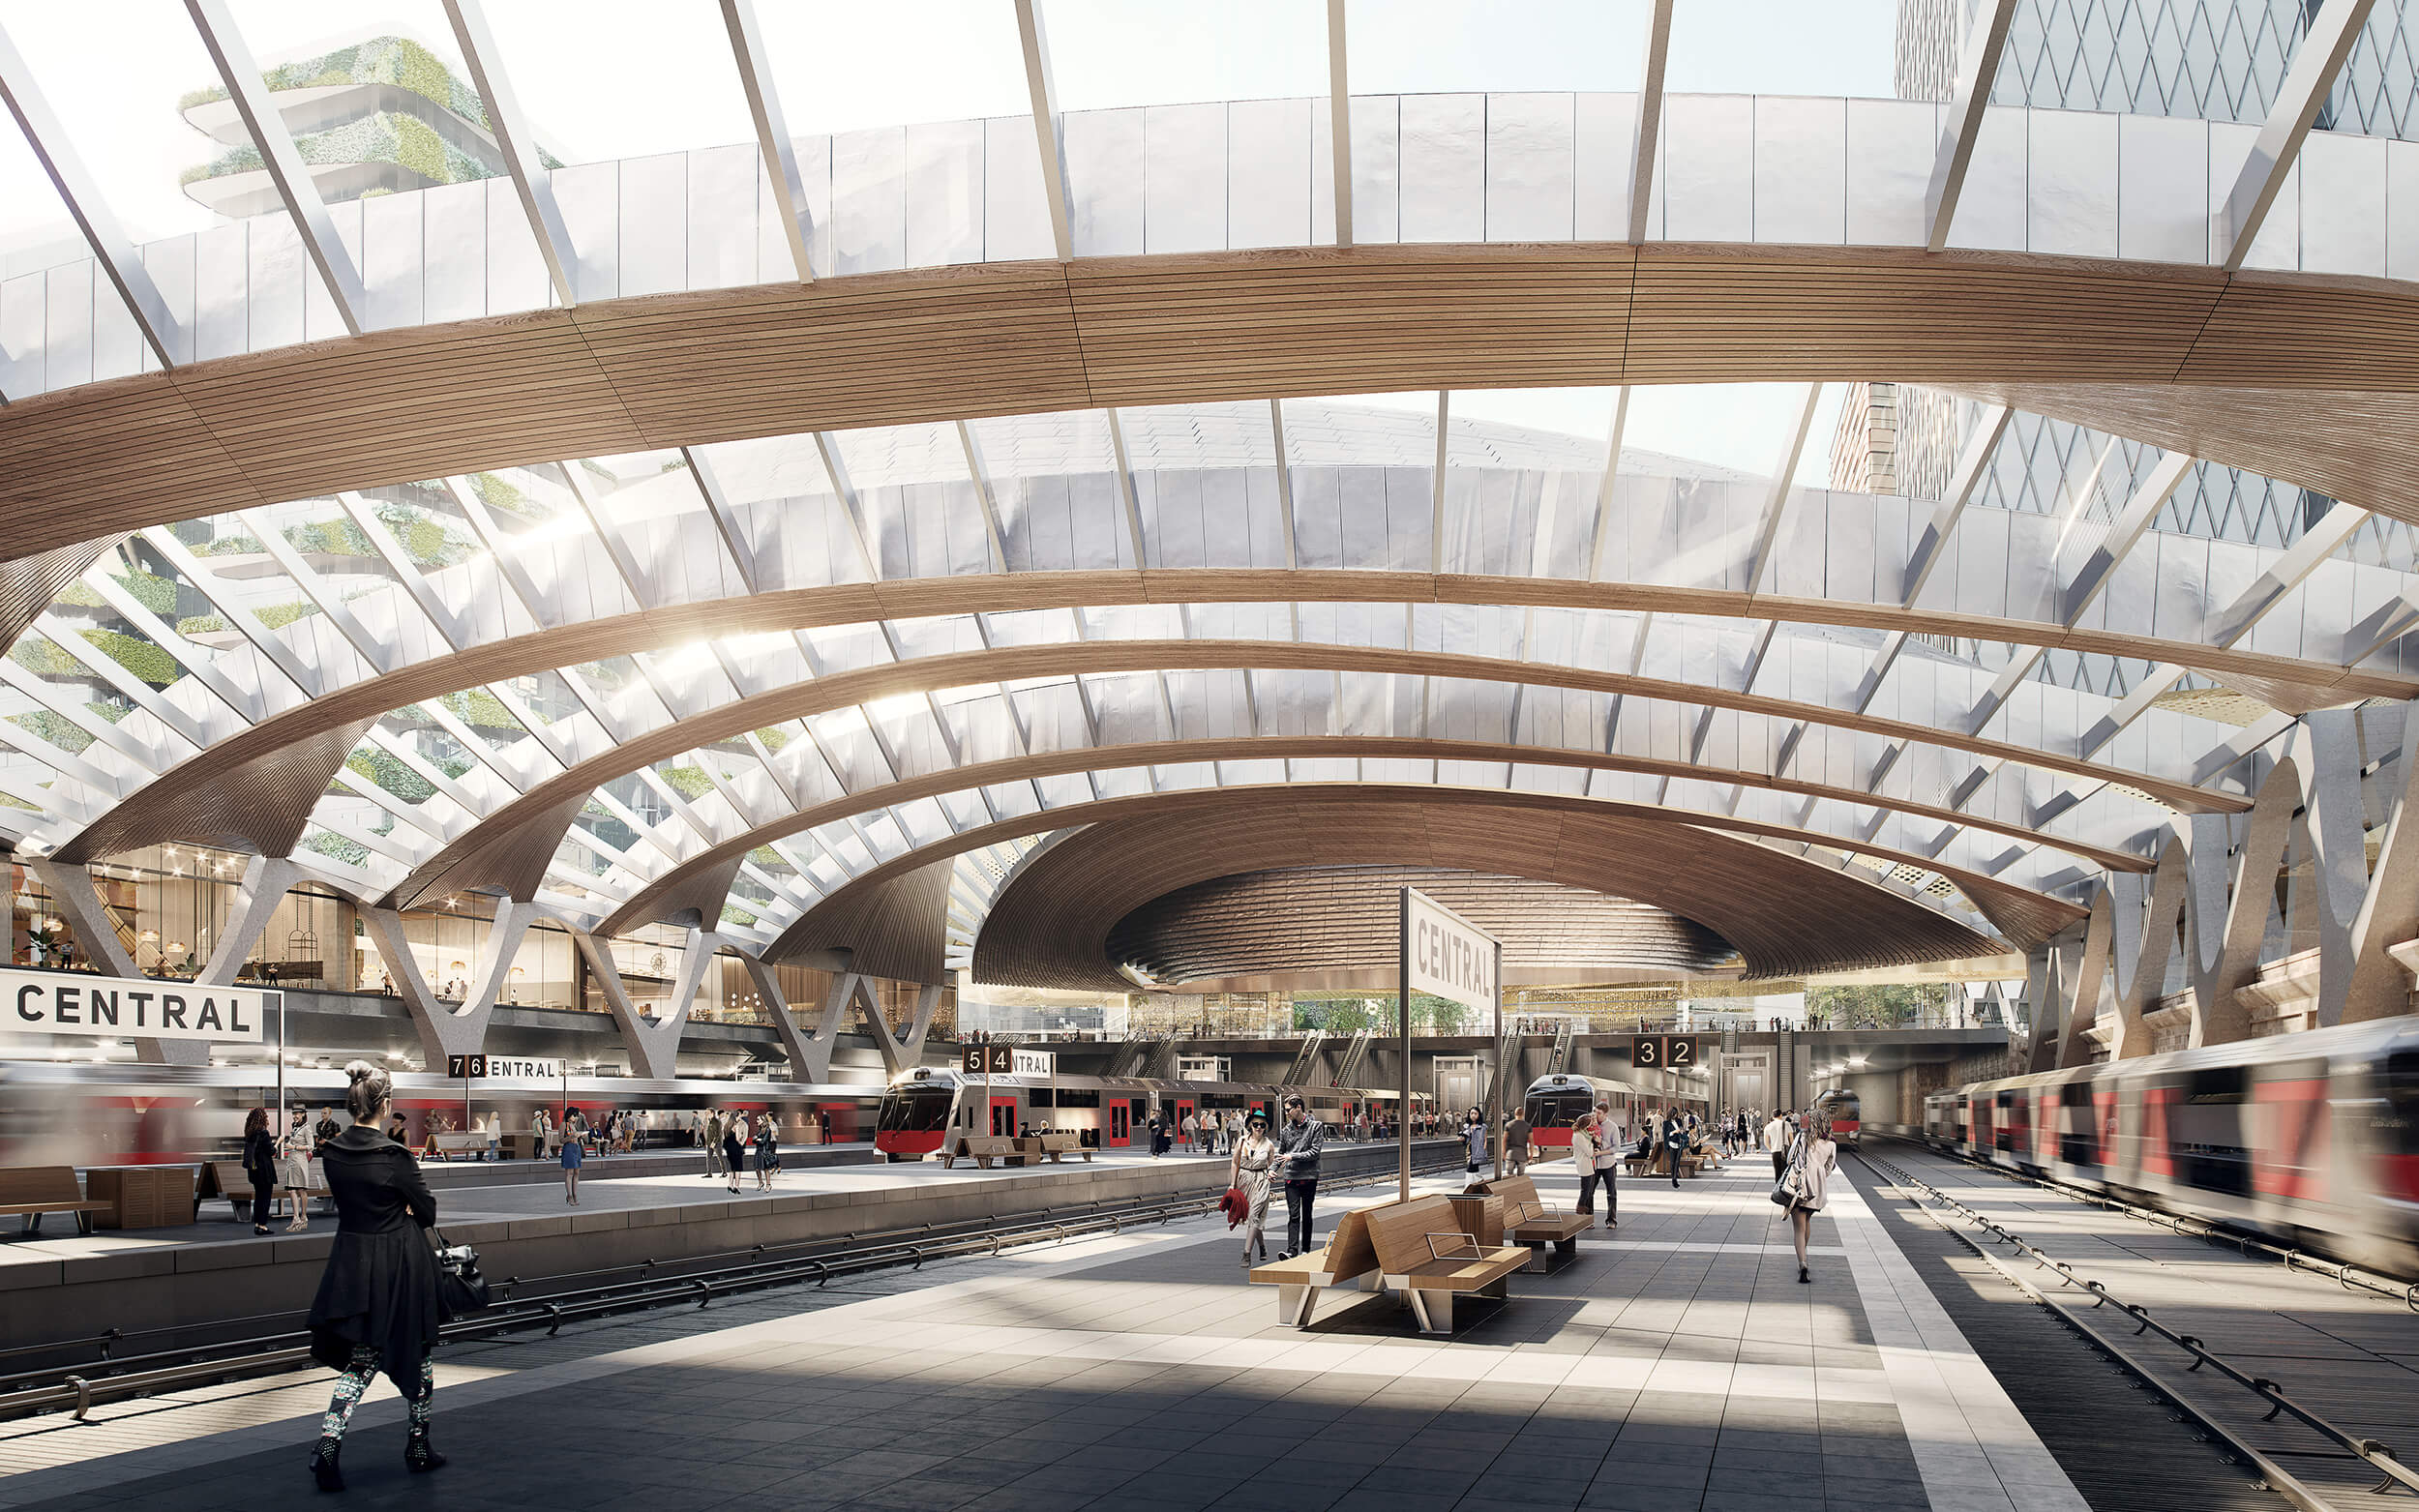 <p>Central Station<br />
Sydney, Australia</p>
<p>Architecture By FK & TZG<br />
2018</p>
